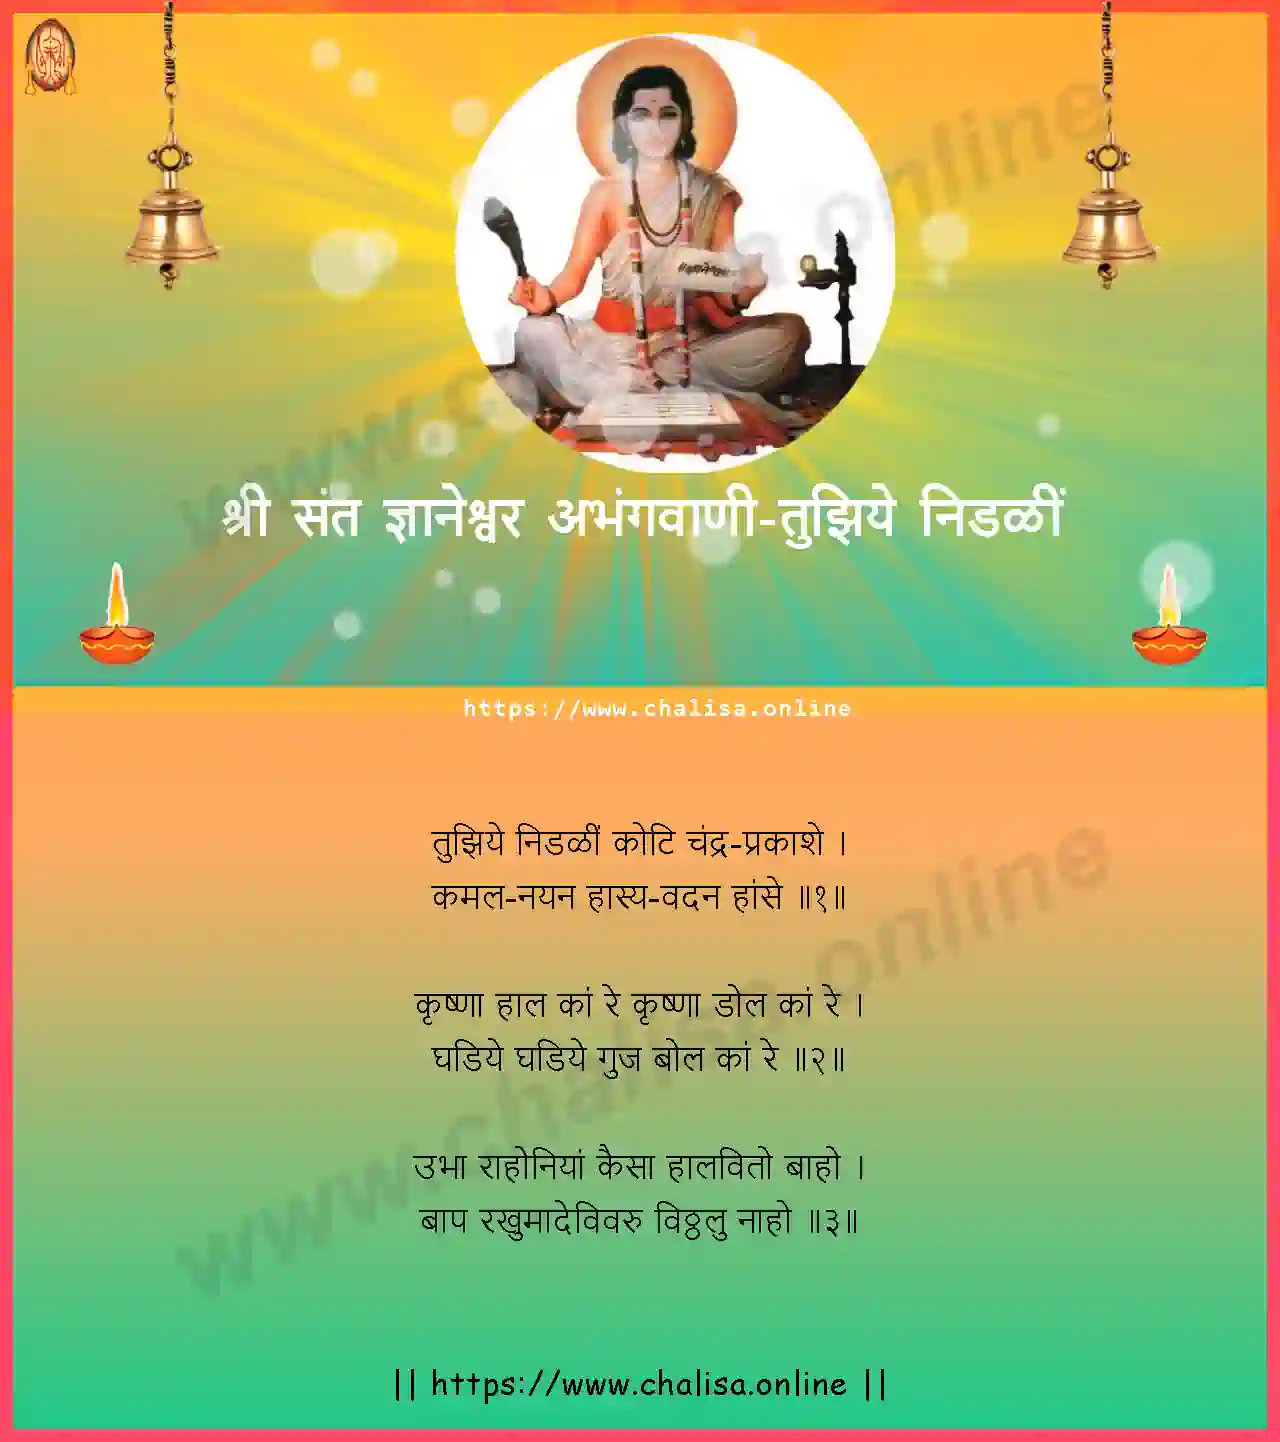 tujhiye-nidhali-shri-sant-dnyaneshwar-abhang-marathi-lyrics-download